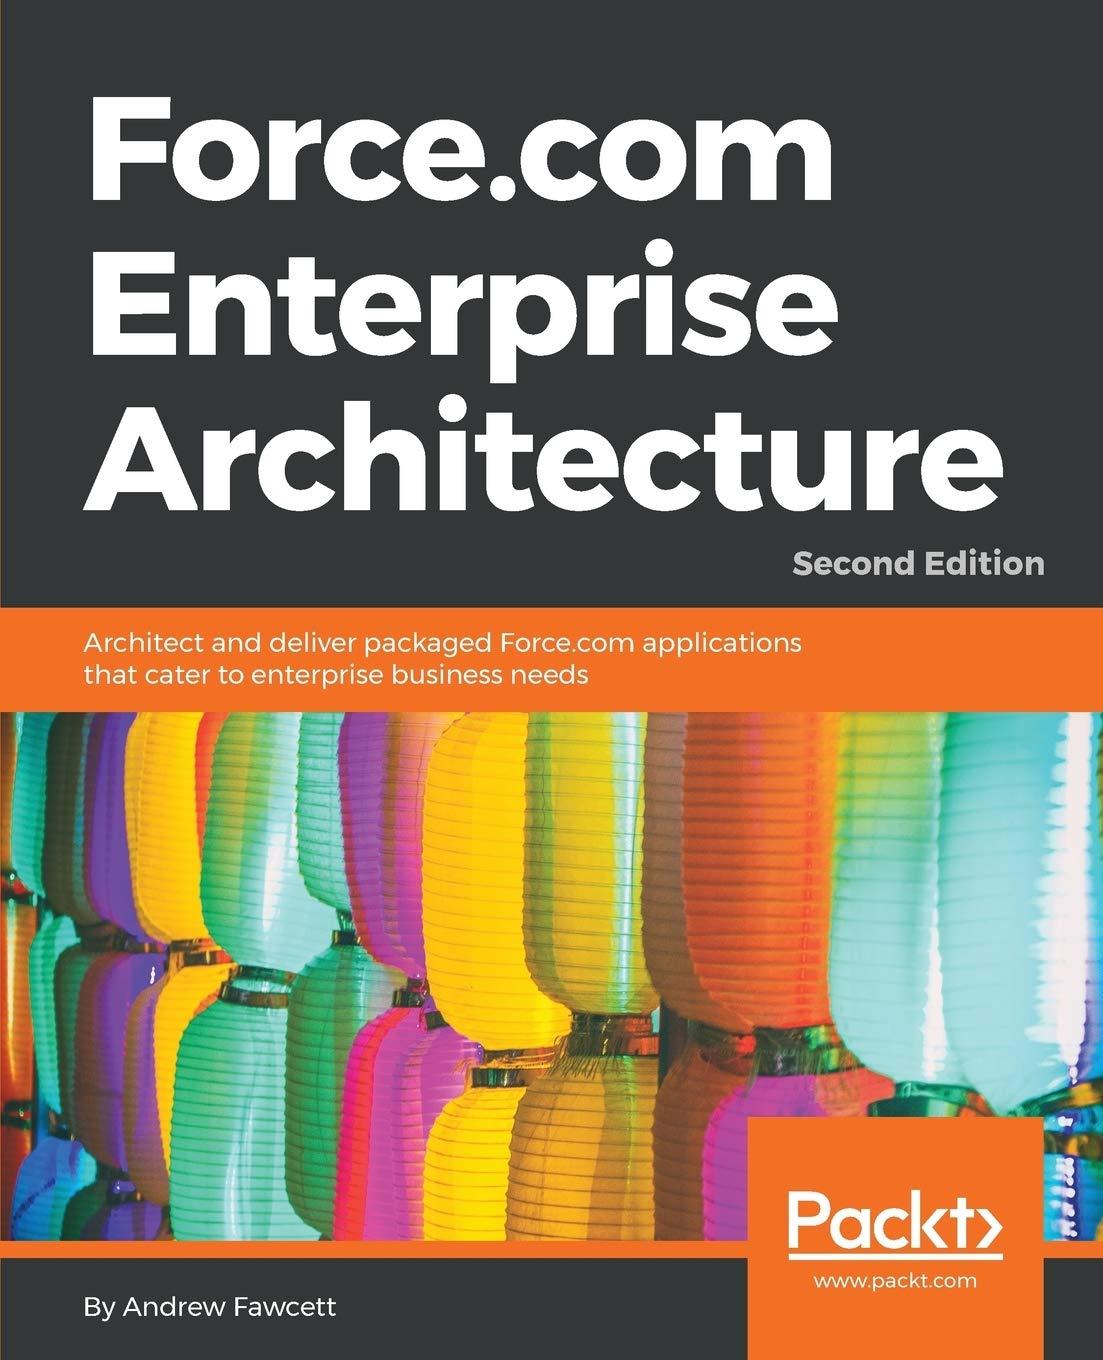 force.com enterprise architecture 2nd edition andrew fawcett 1786463687, 978-1786463685